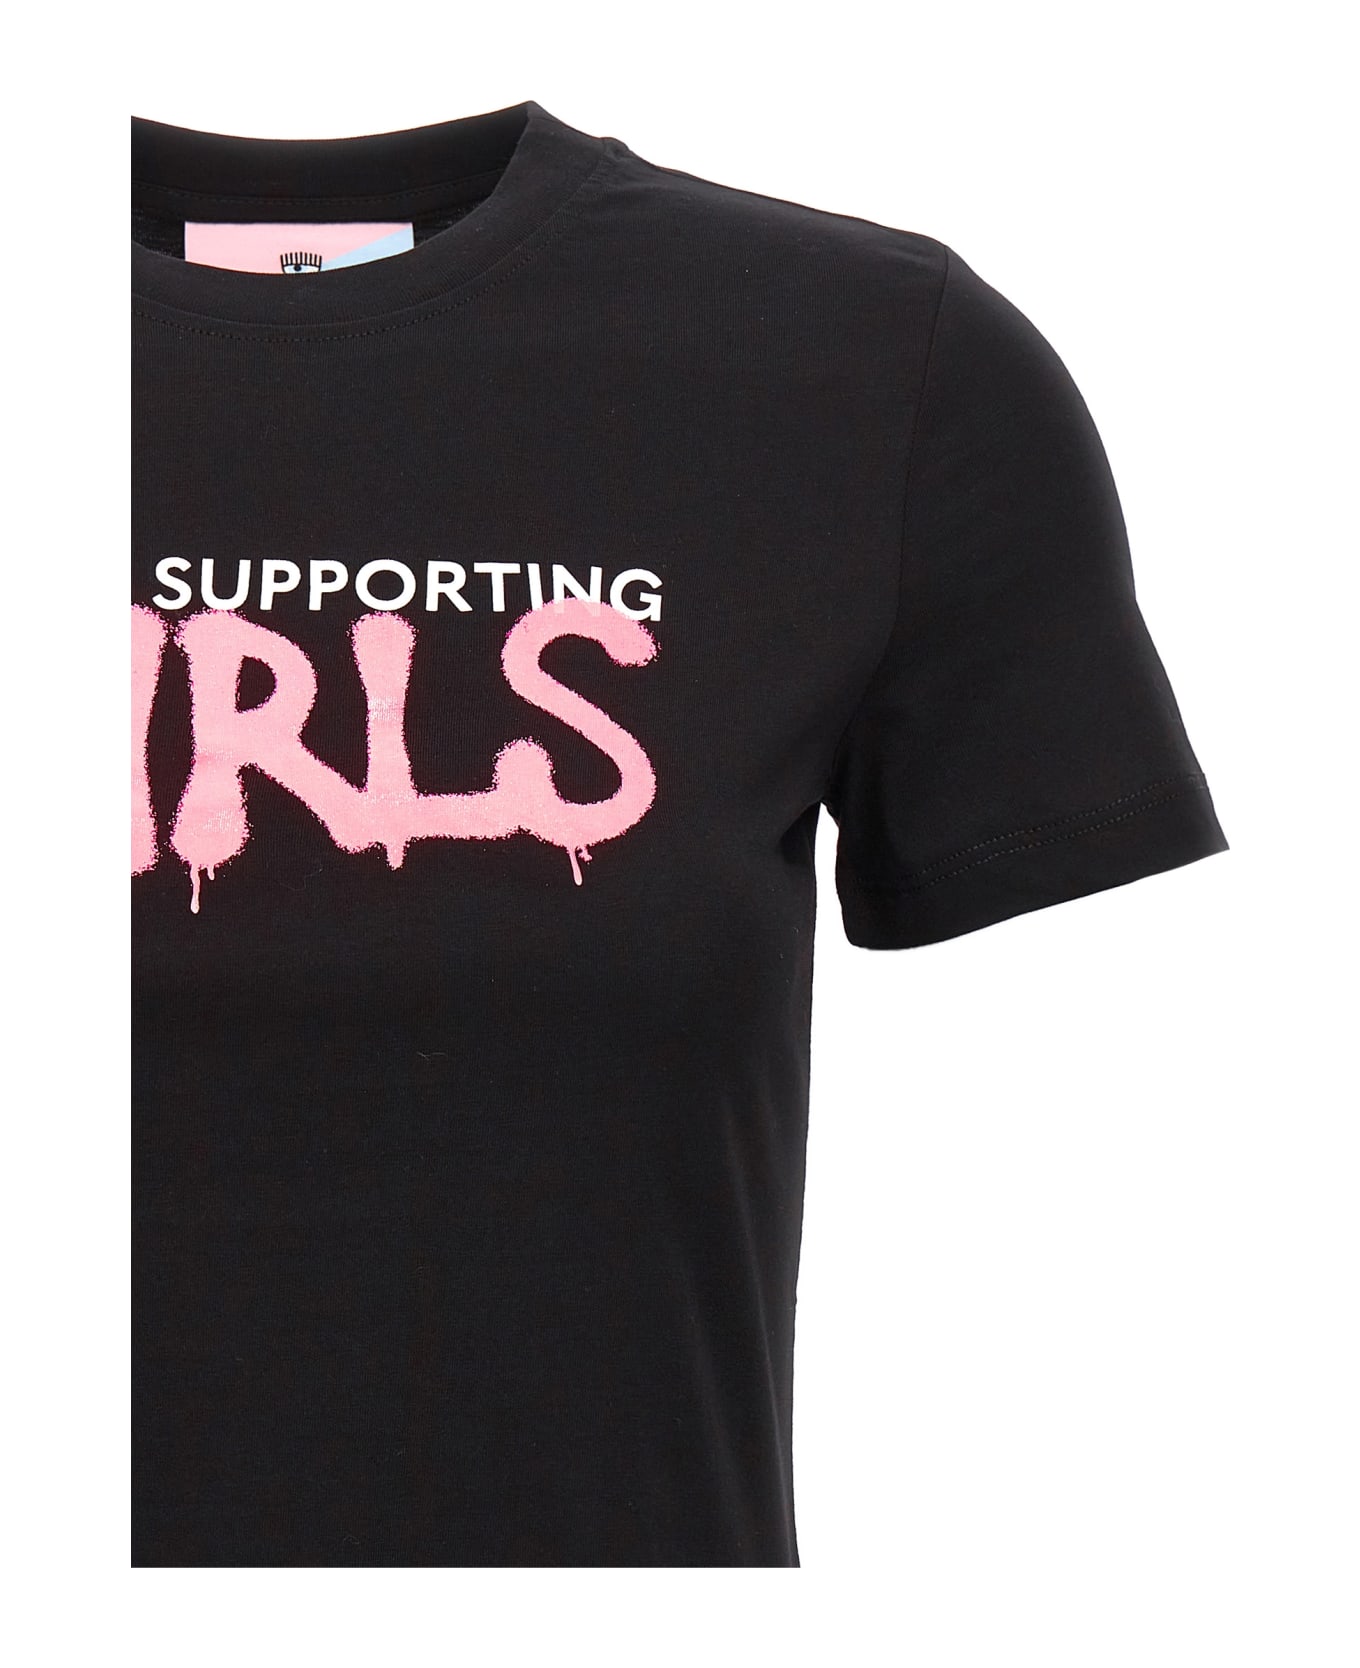 Chiara Ferragni 'girls Supporting Girls' T-shirt - Black   Tシャツ